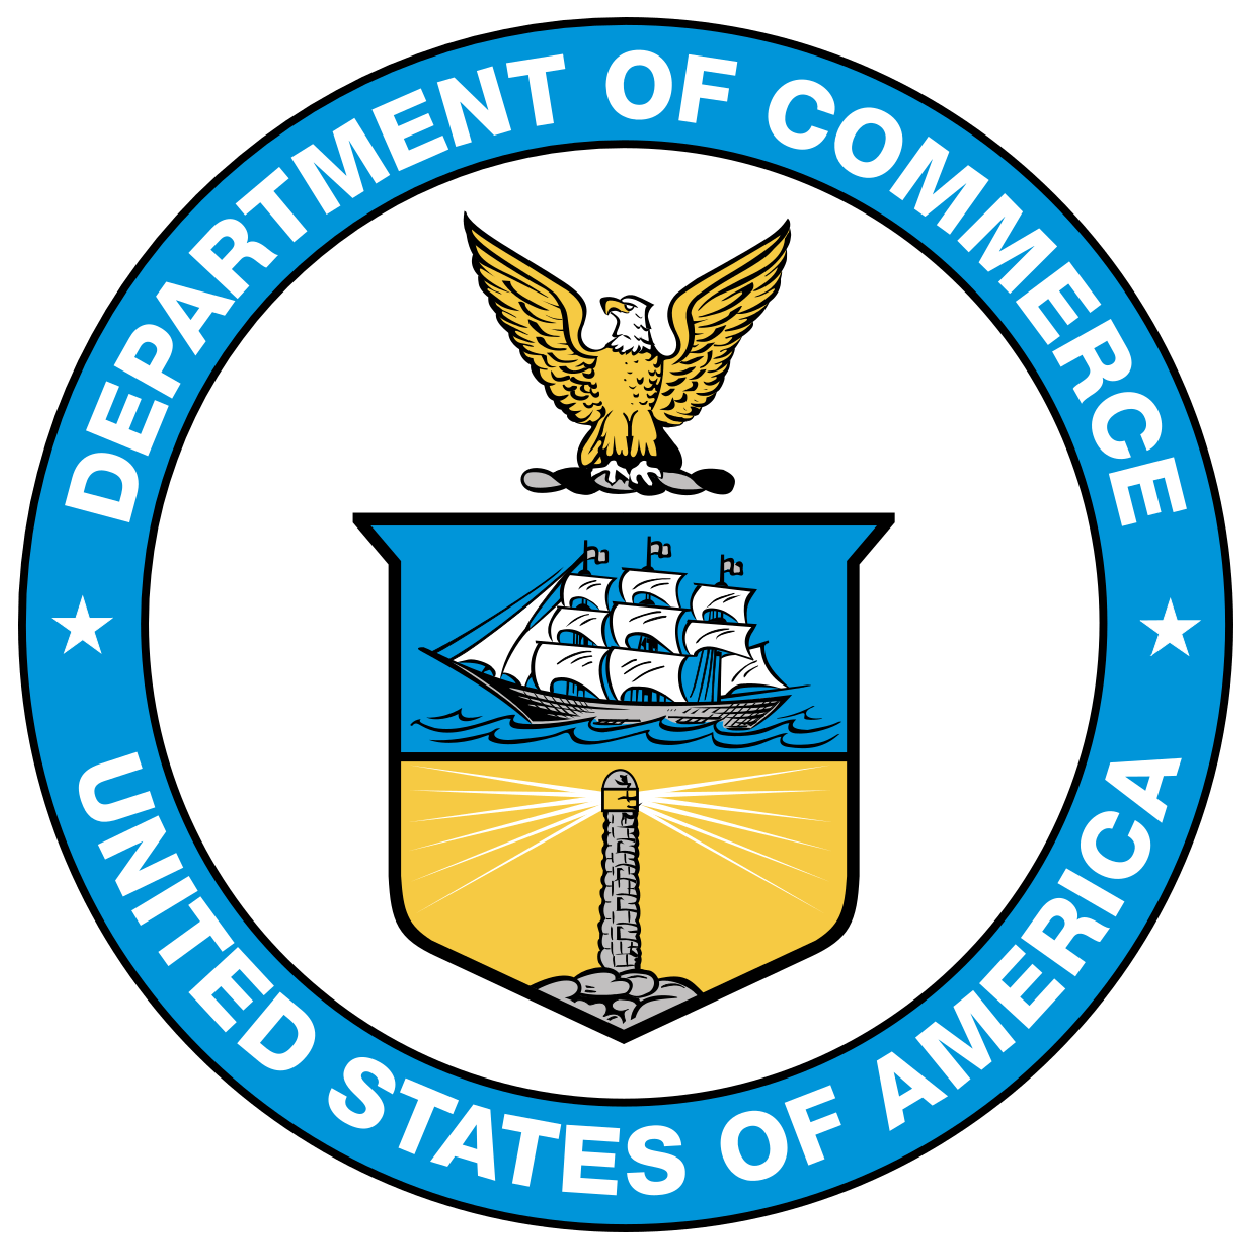 U.S. Department of Commerce Seal